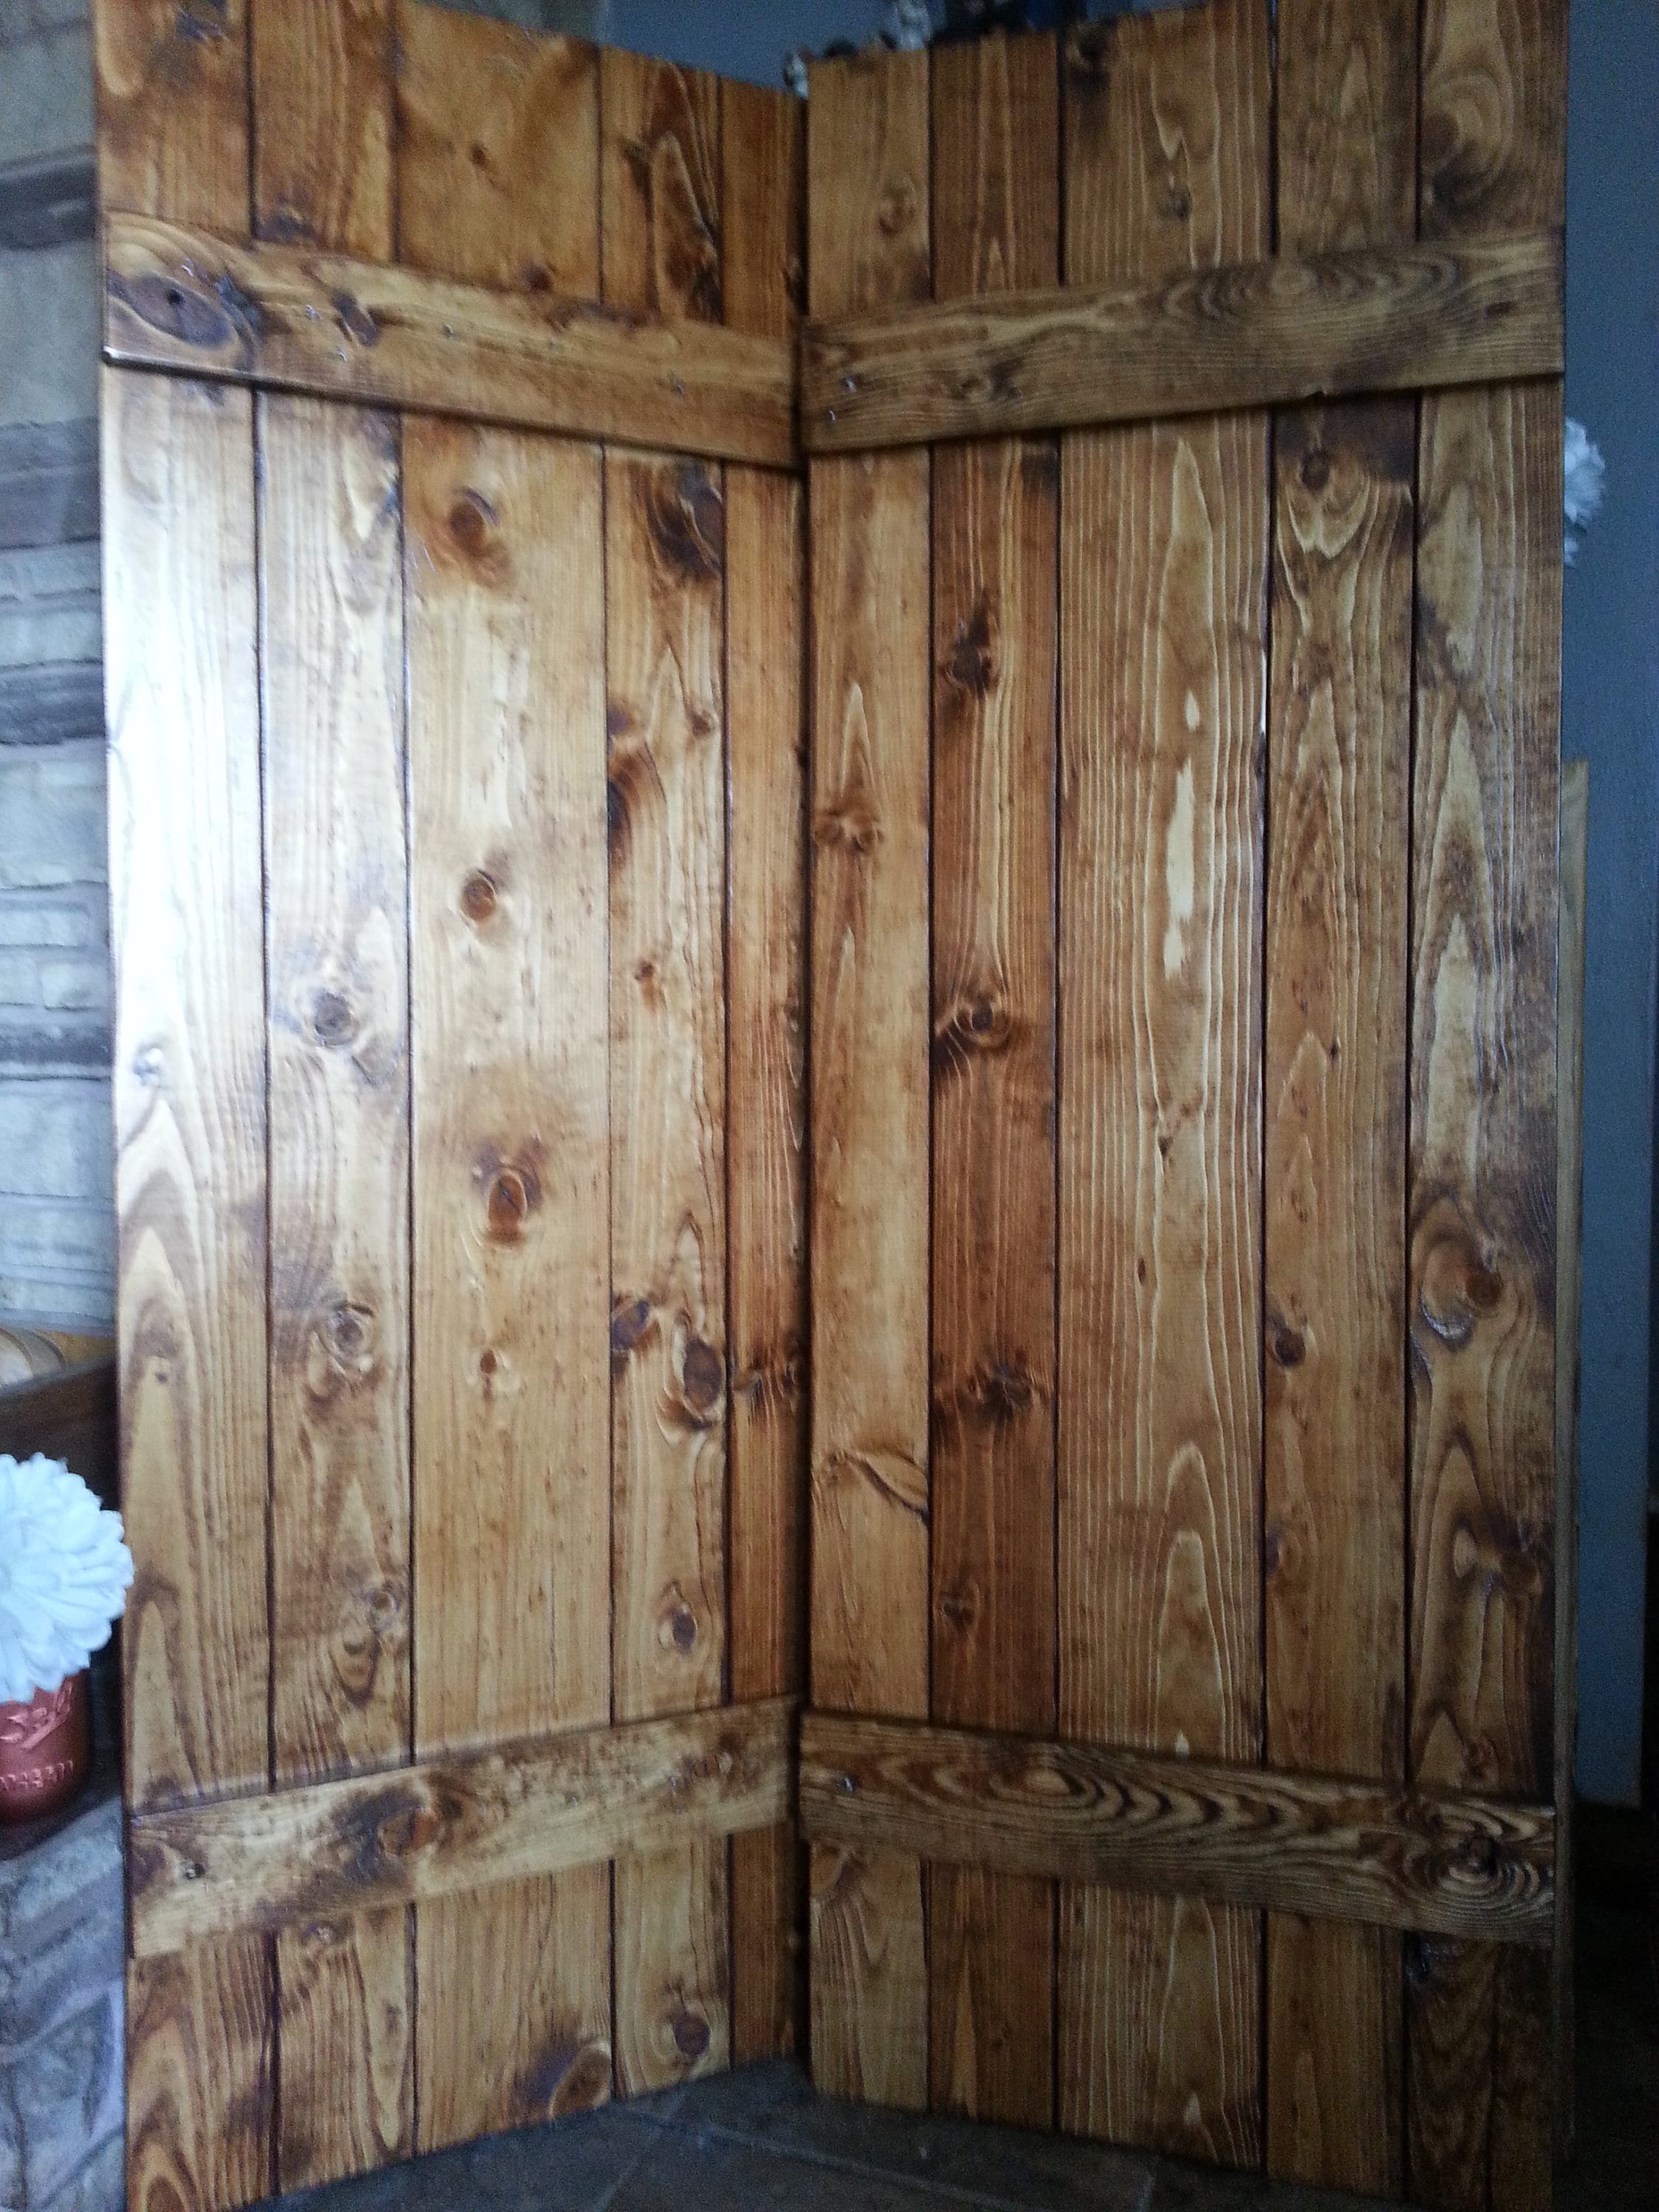 48 RUSTIC wood shutters - Primitive shutters - Decorative ...